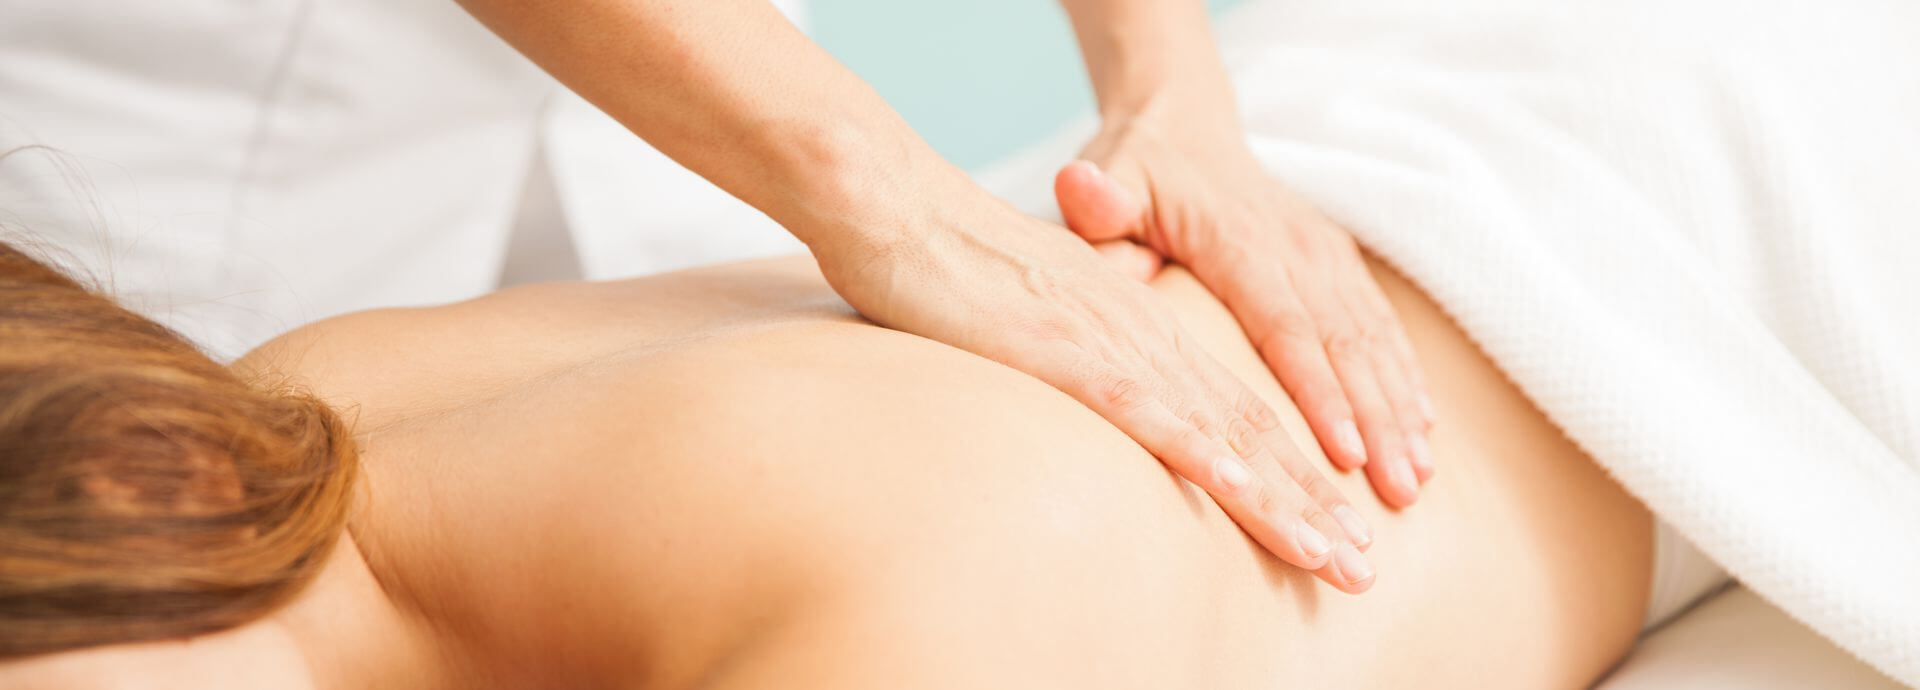 Massage Therapist Calgary